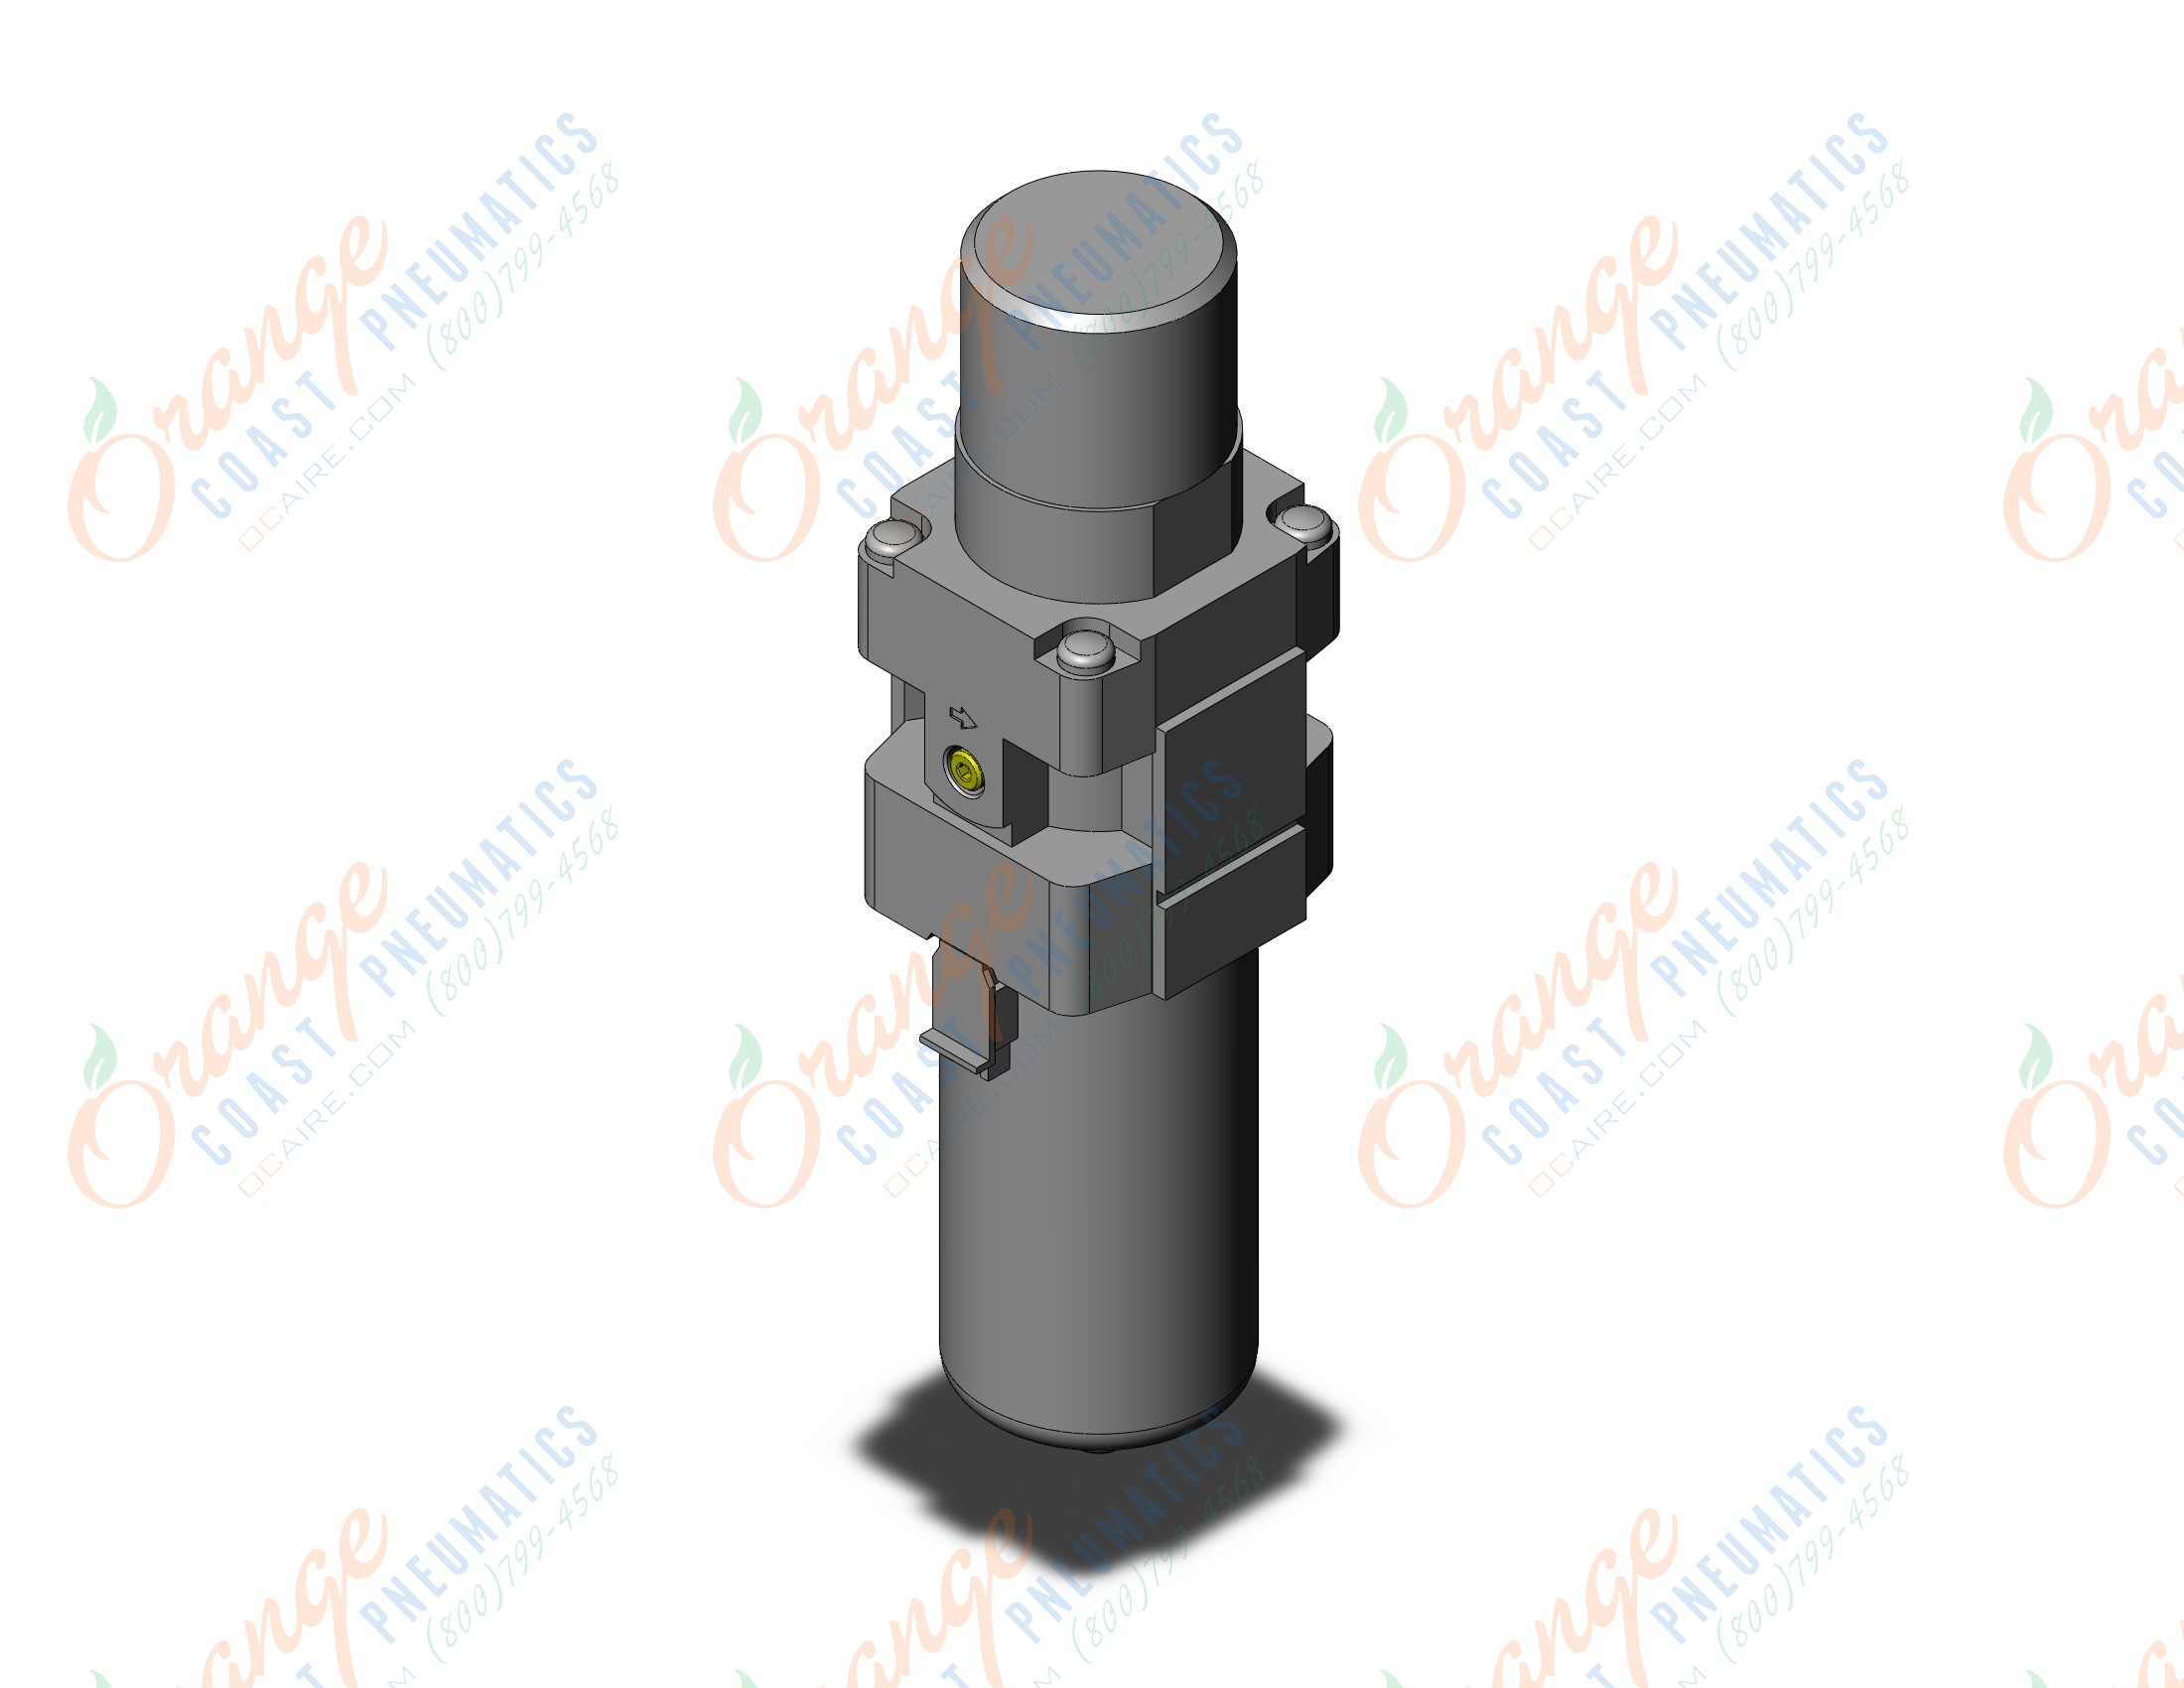 SMC AW40-F03-8-A filter/regulator, FILTER/REGULATOR, MODULAR F.R.L.